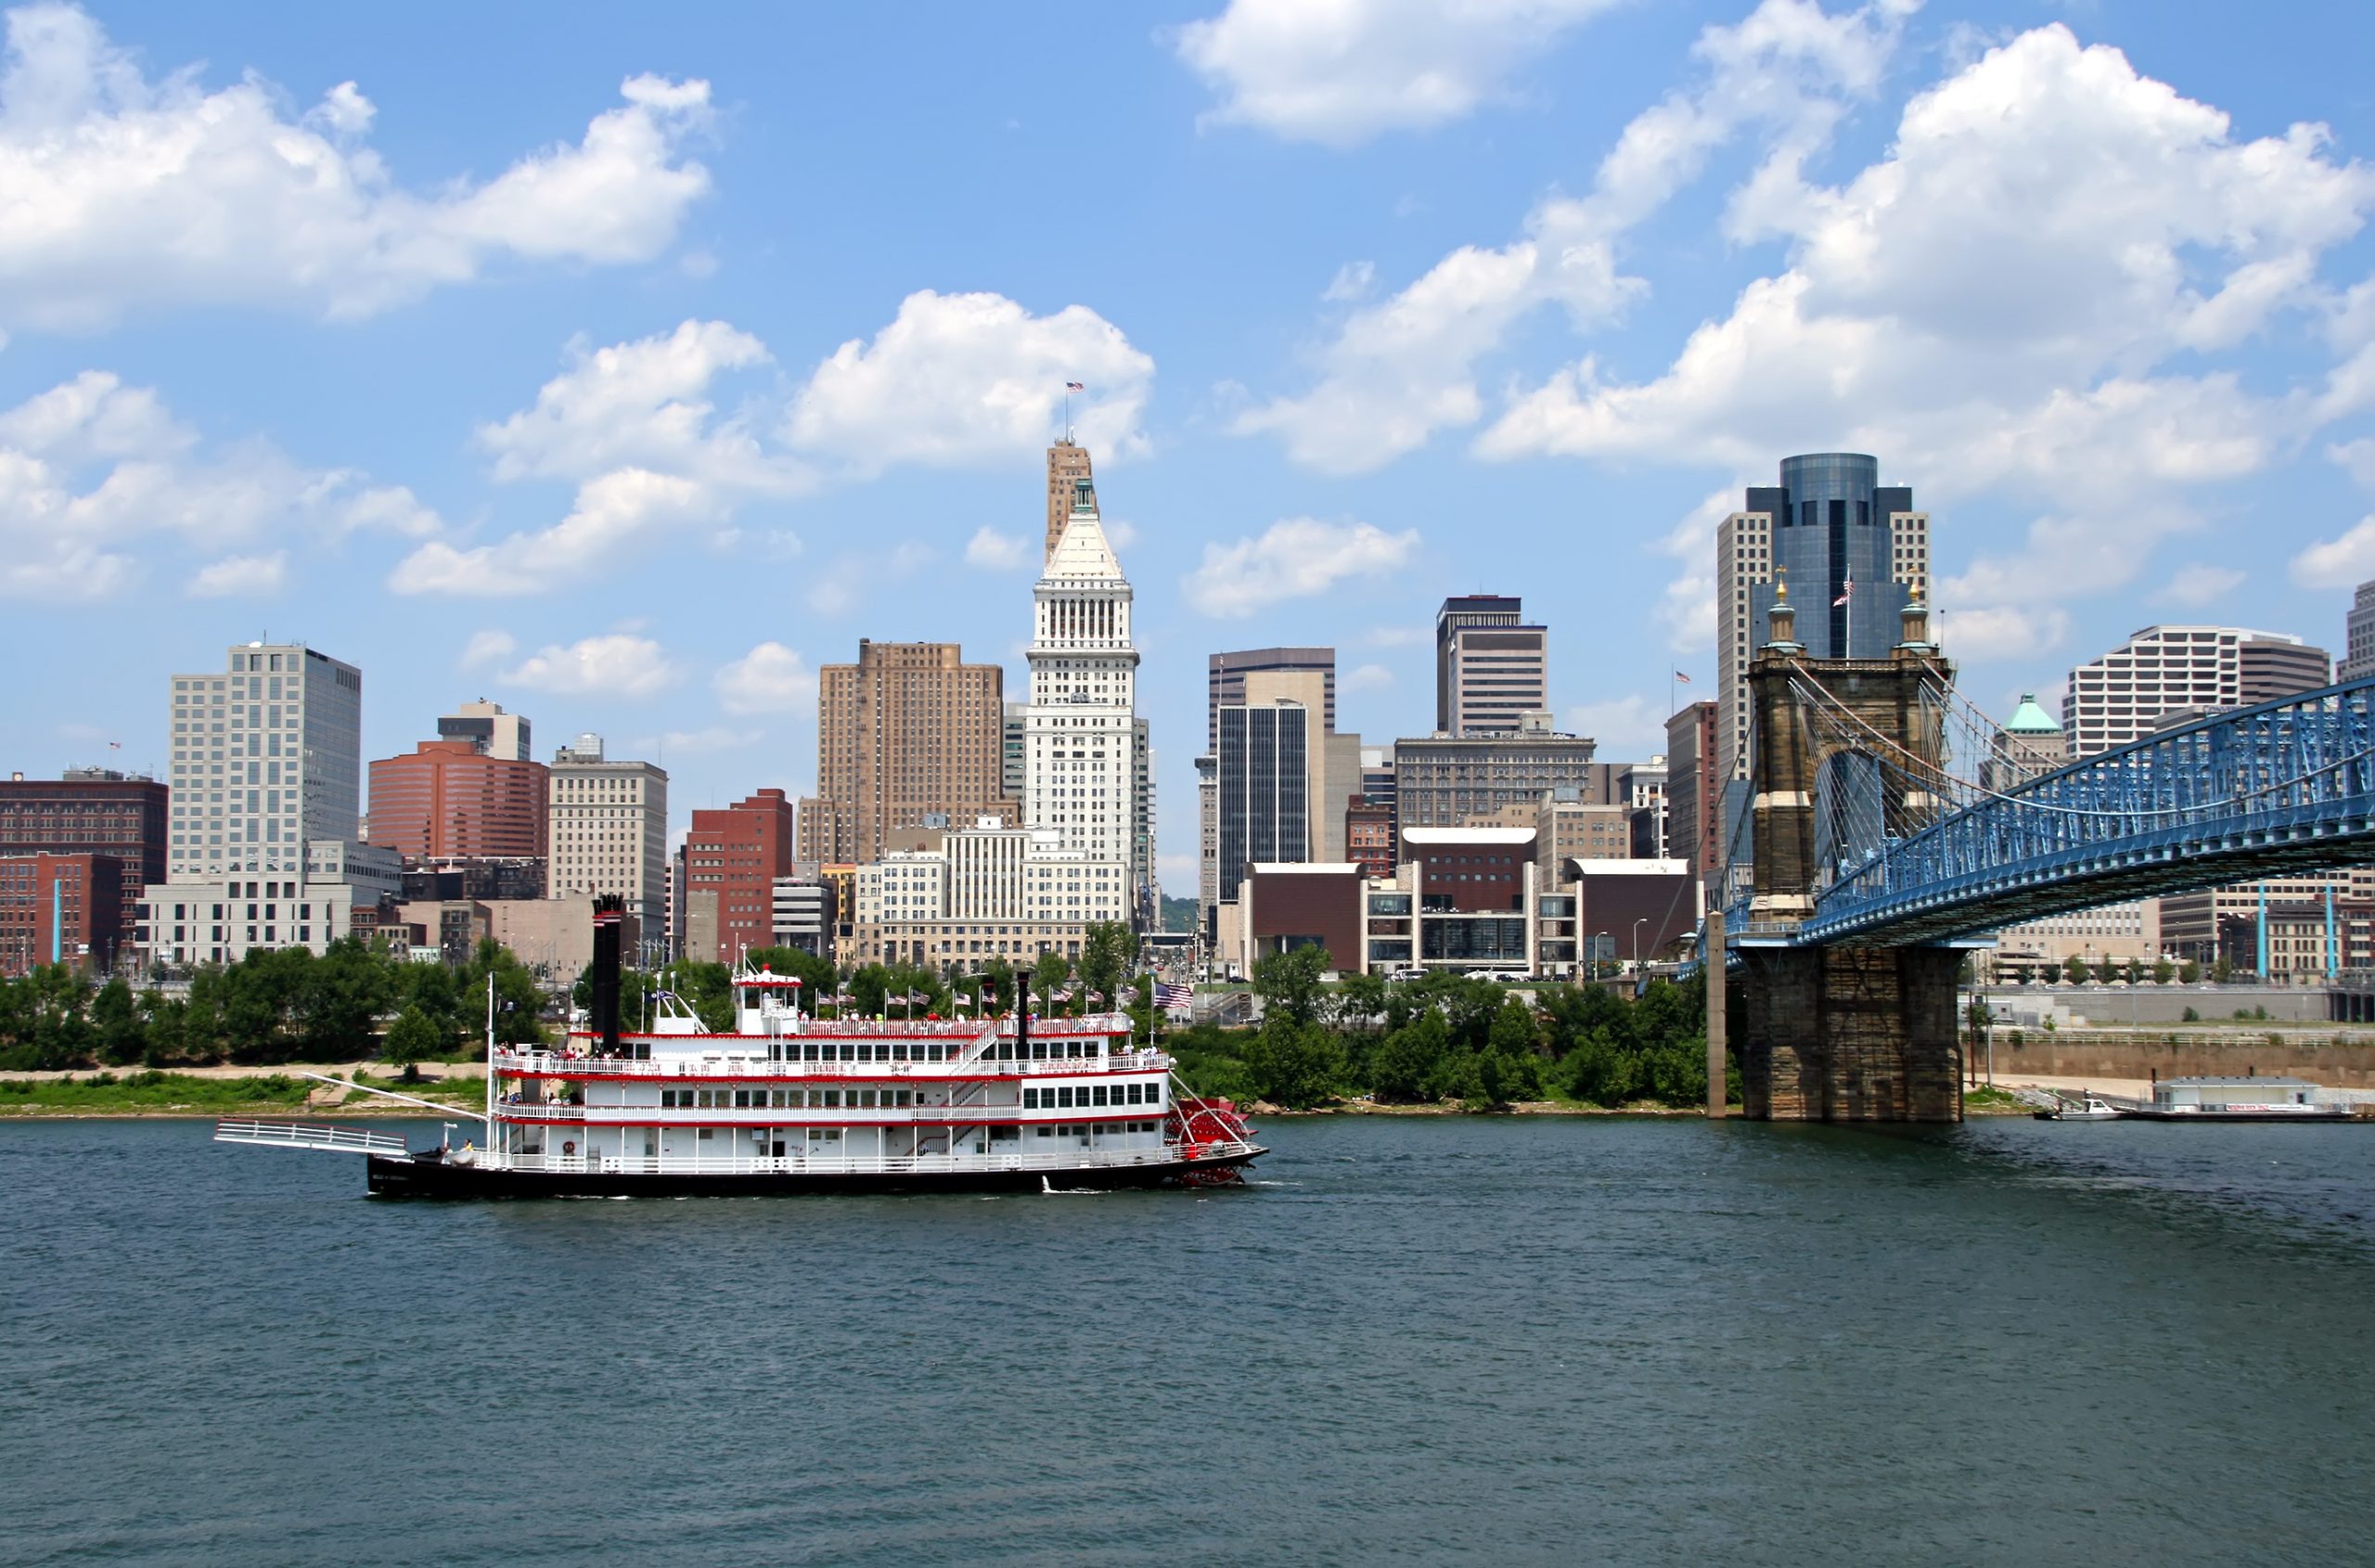 Replica steamboat travels down the Ohio River in front of the Cincinnati skyline.